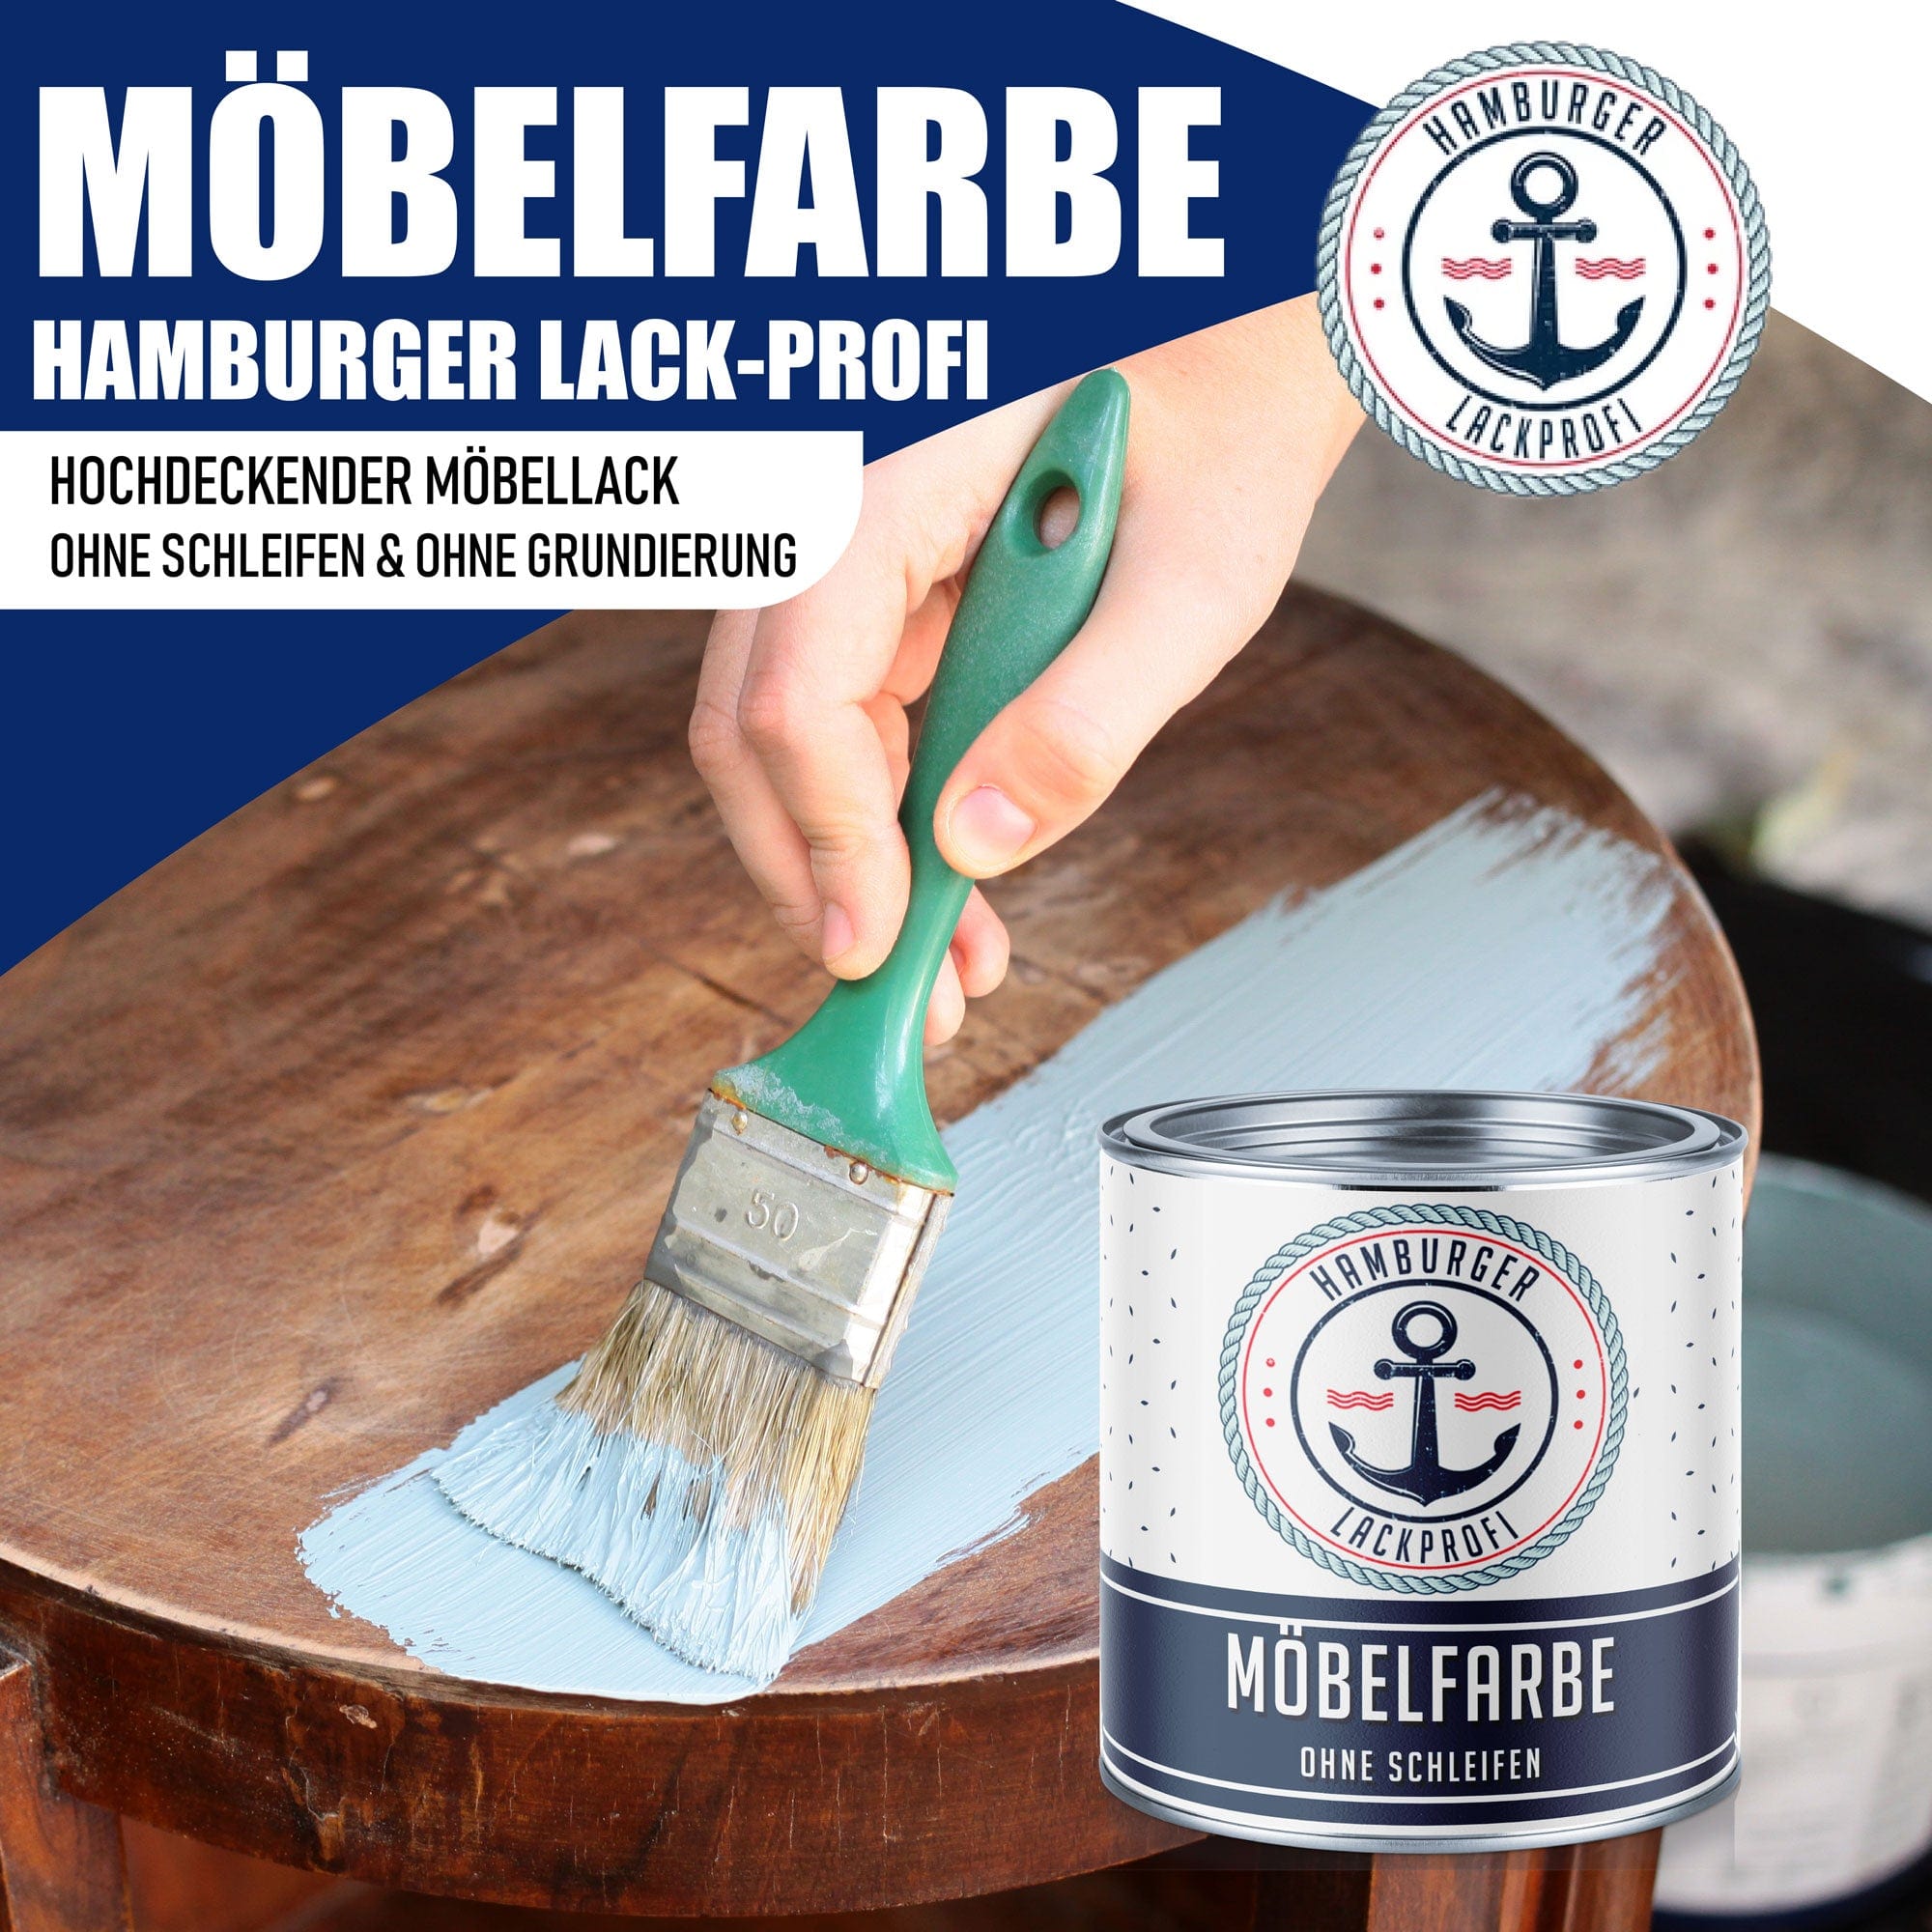 Hamburger Lack-Profi Möbelfarbe im Spar-Set - Möbellack ohne Schleifen Hamburger Lack-Profi + Lackierset (X300) & Verdünnung (1 L)